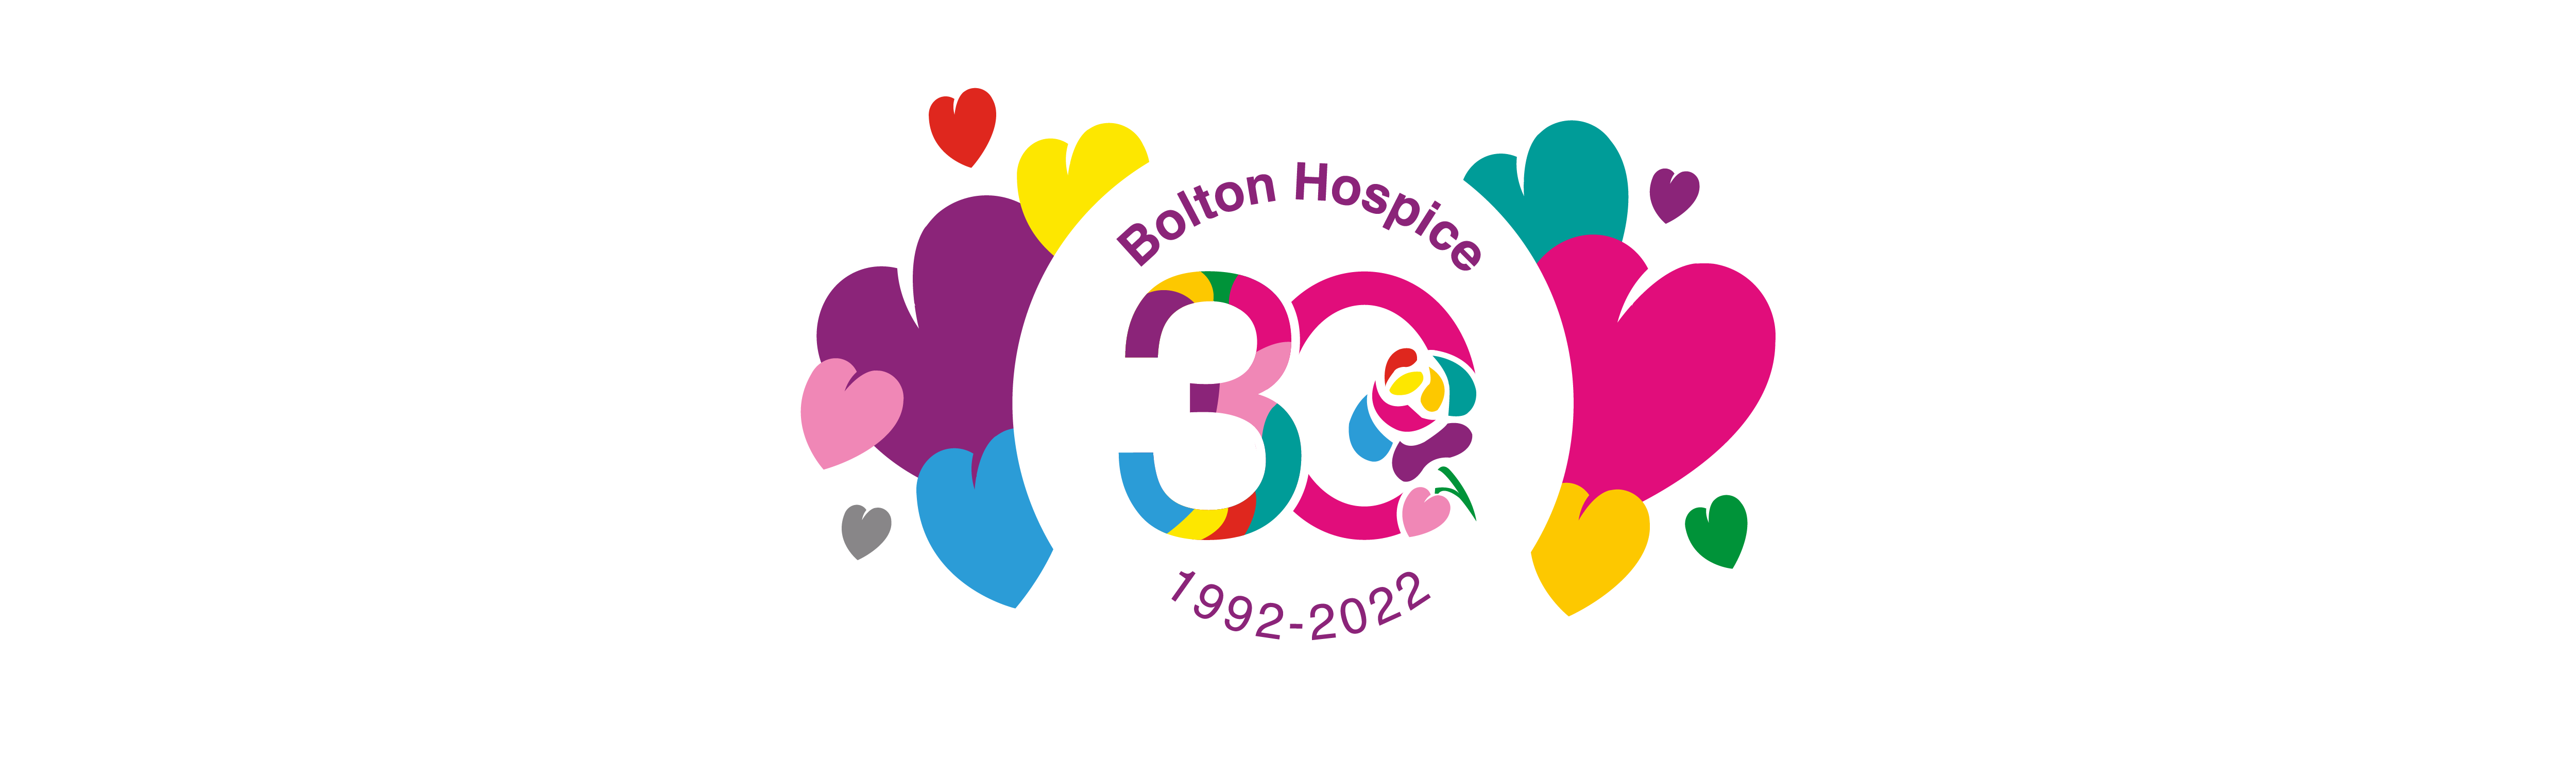 30th anniversary logo